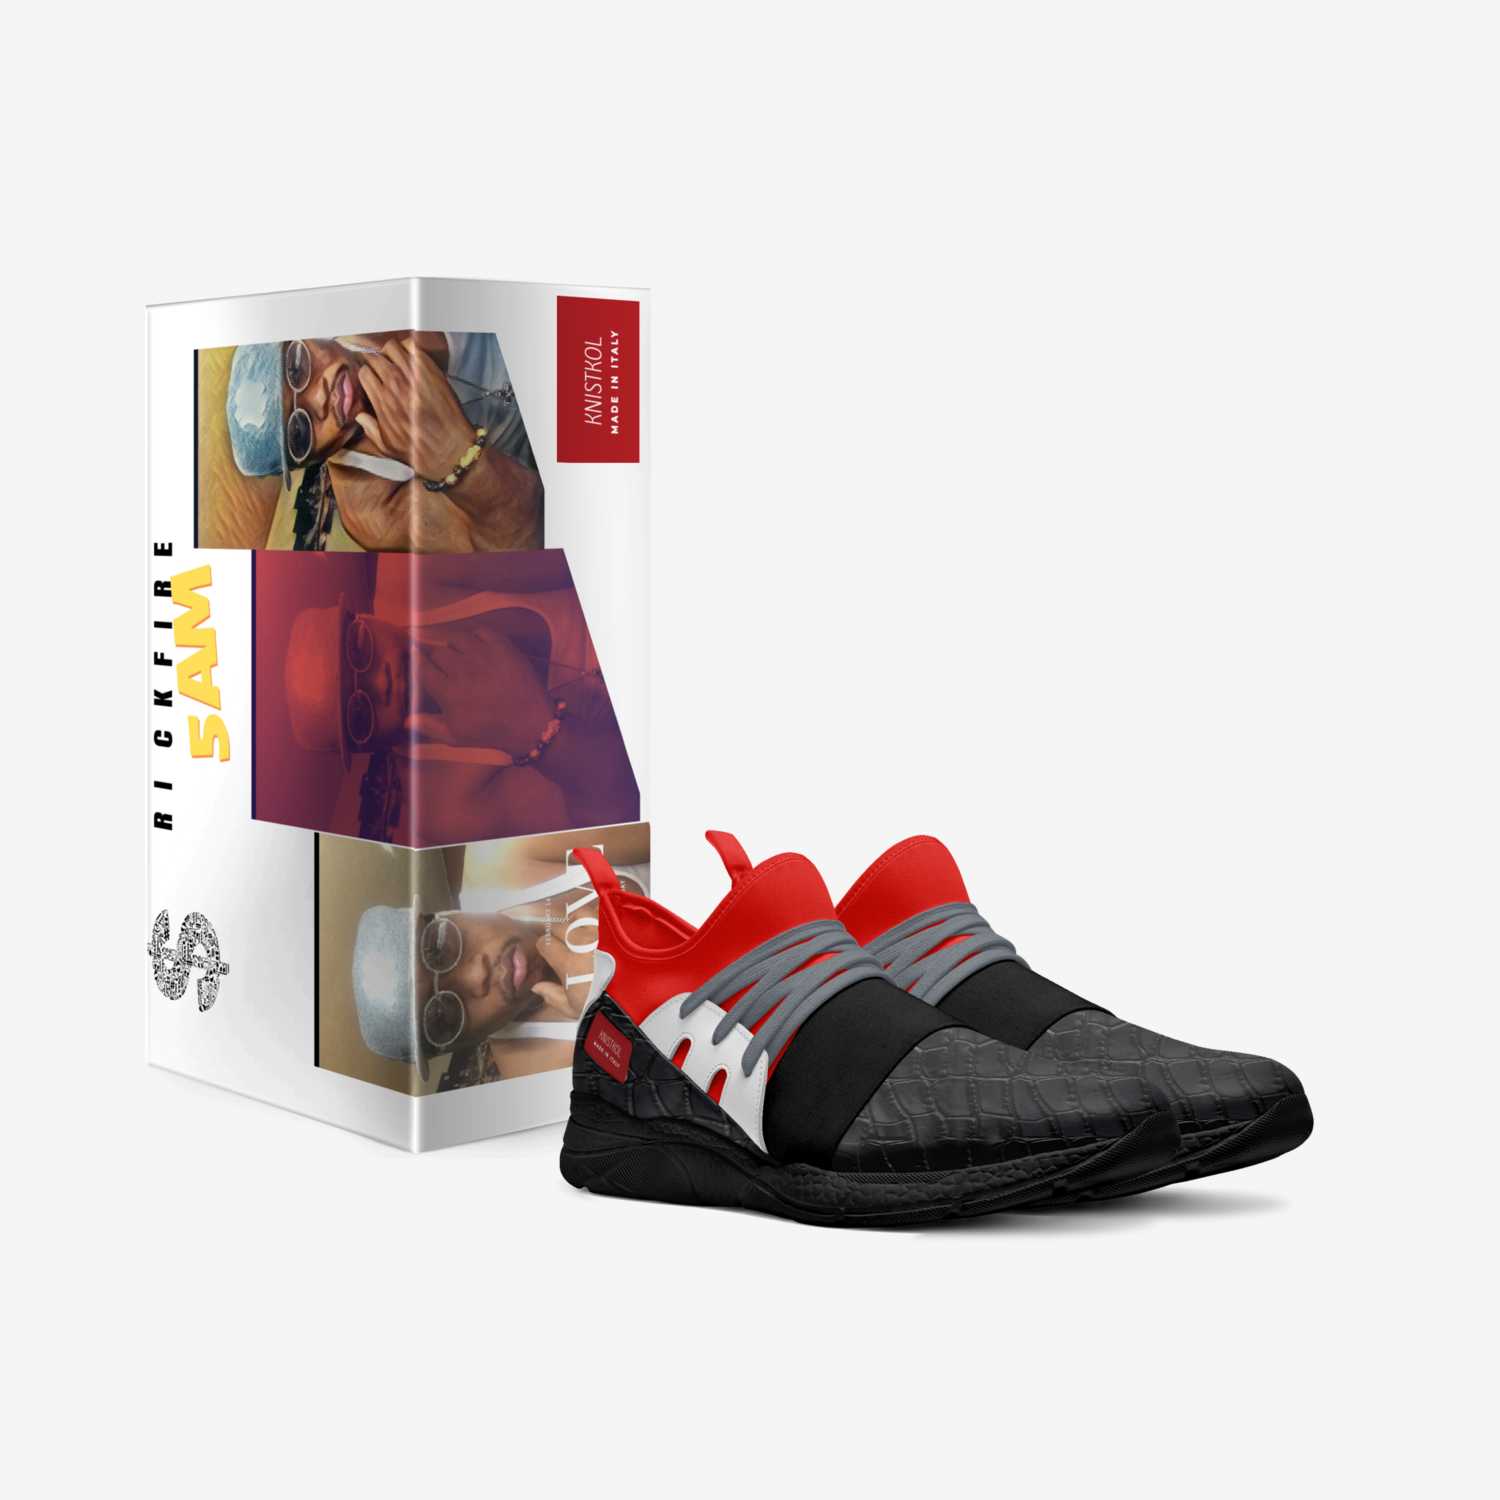 KNISTKOL custom made in Italy shoes by Ricardo Velasquez | Box view